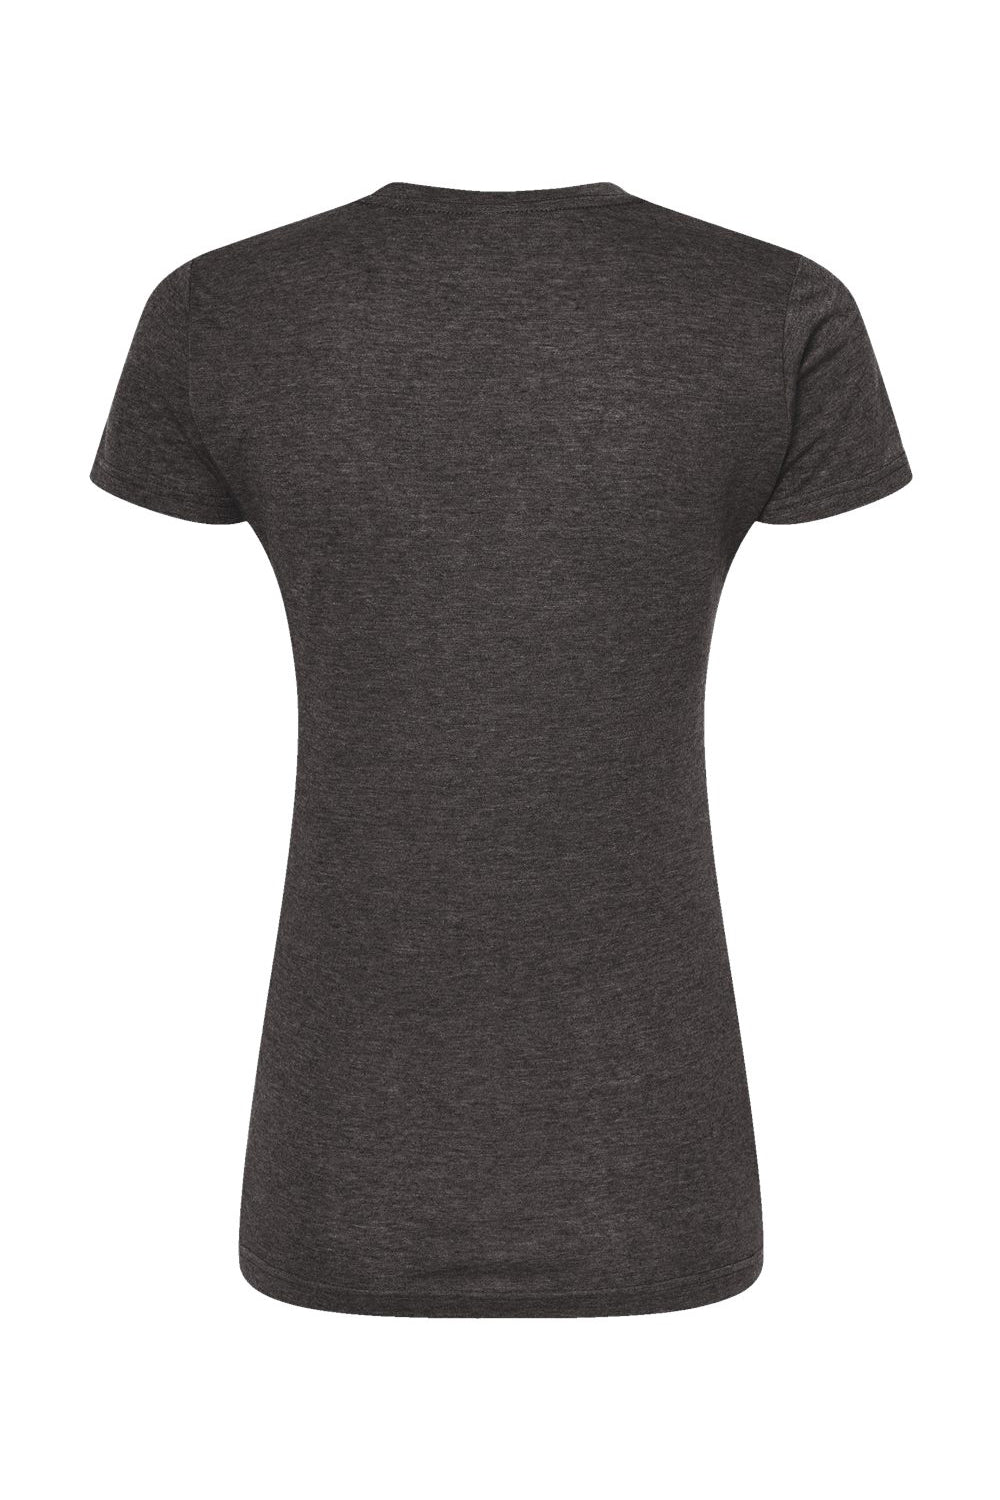 Tultex 240 Womens Poly-Rich Short Sleeve Crewneck T-Shirt Heather Graphite Grey Flat Back